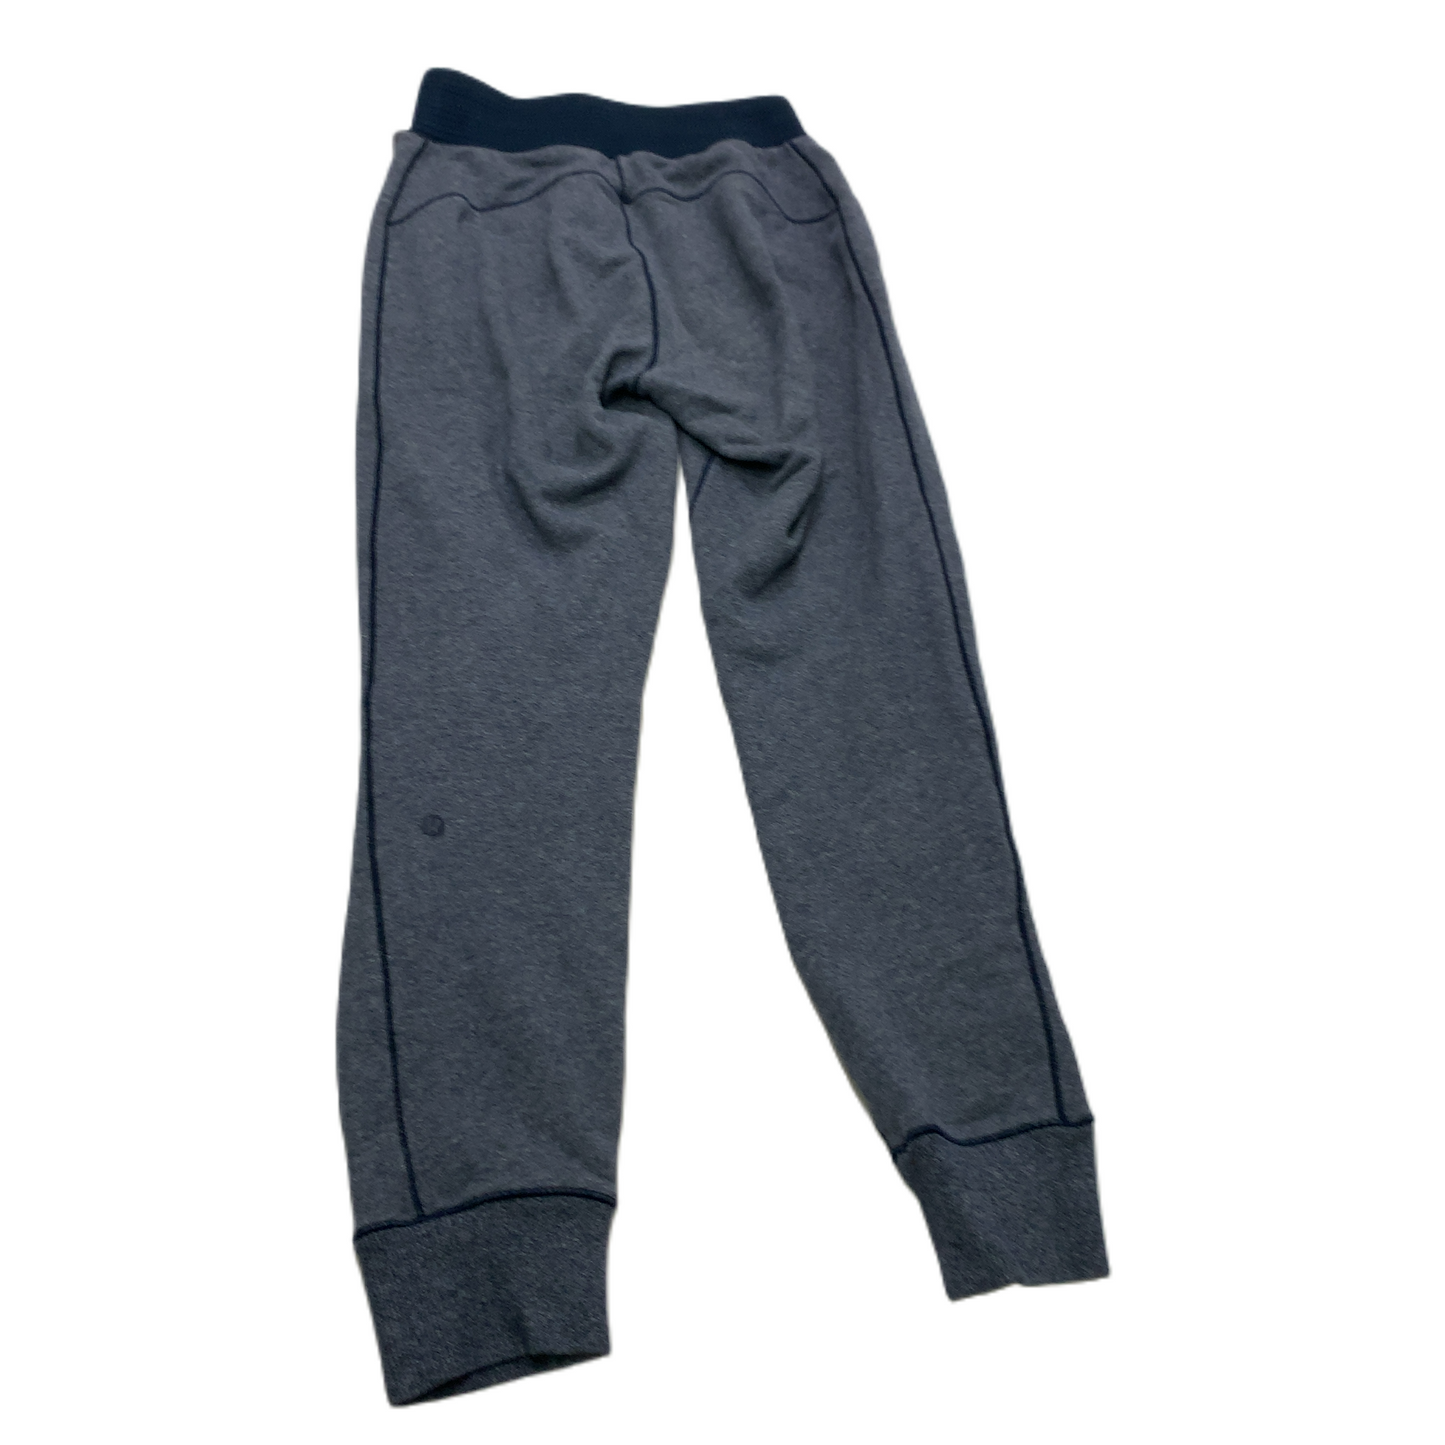 Blue  Athletic Pants By Lululemon  Size: Xs